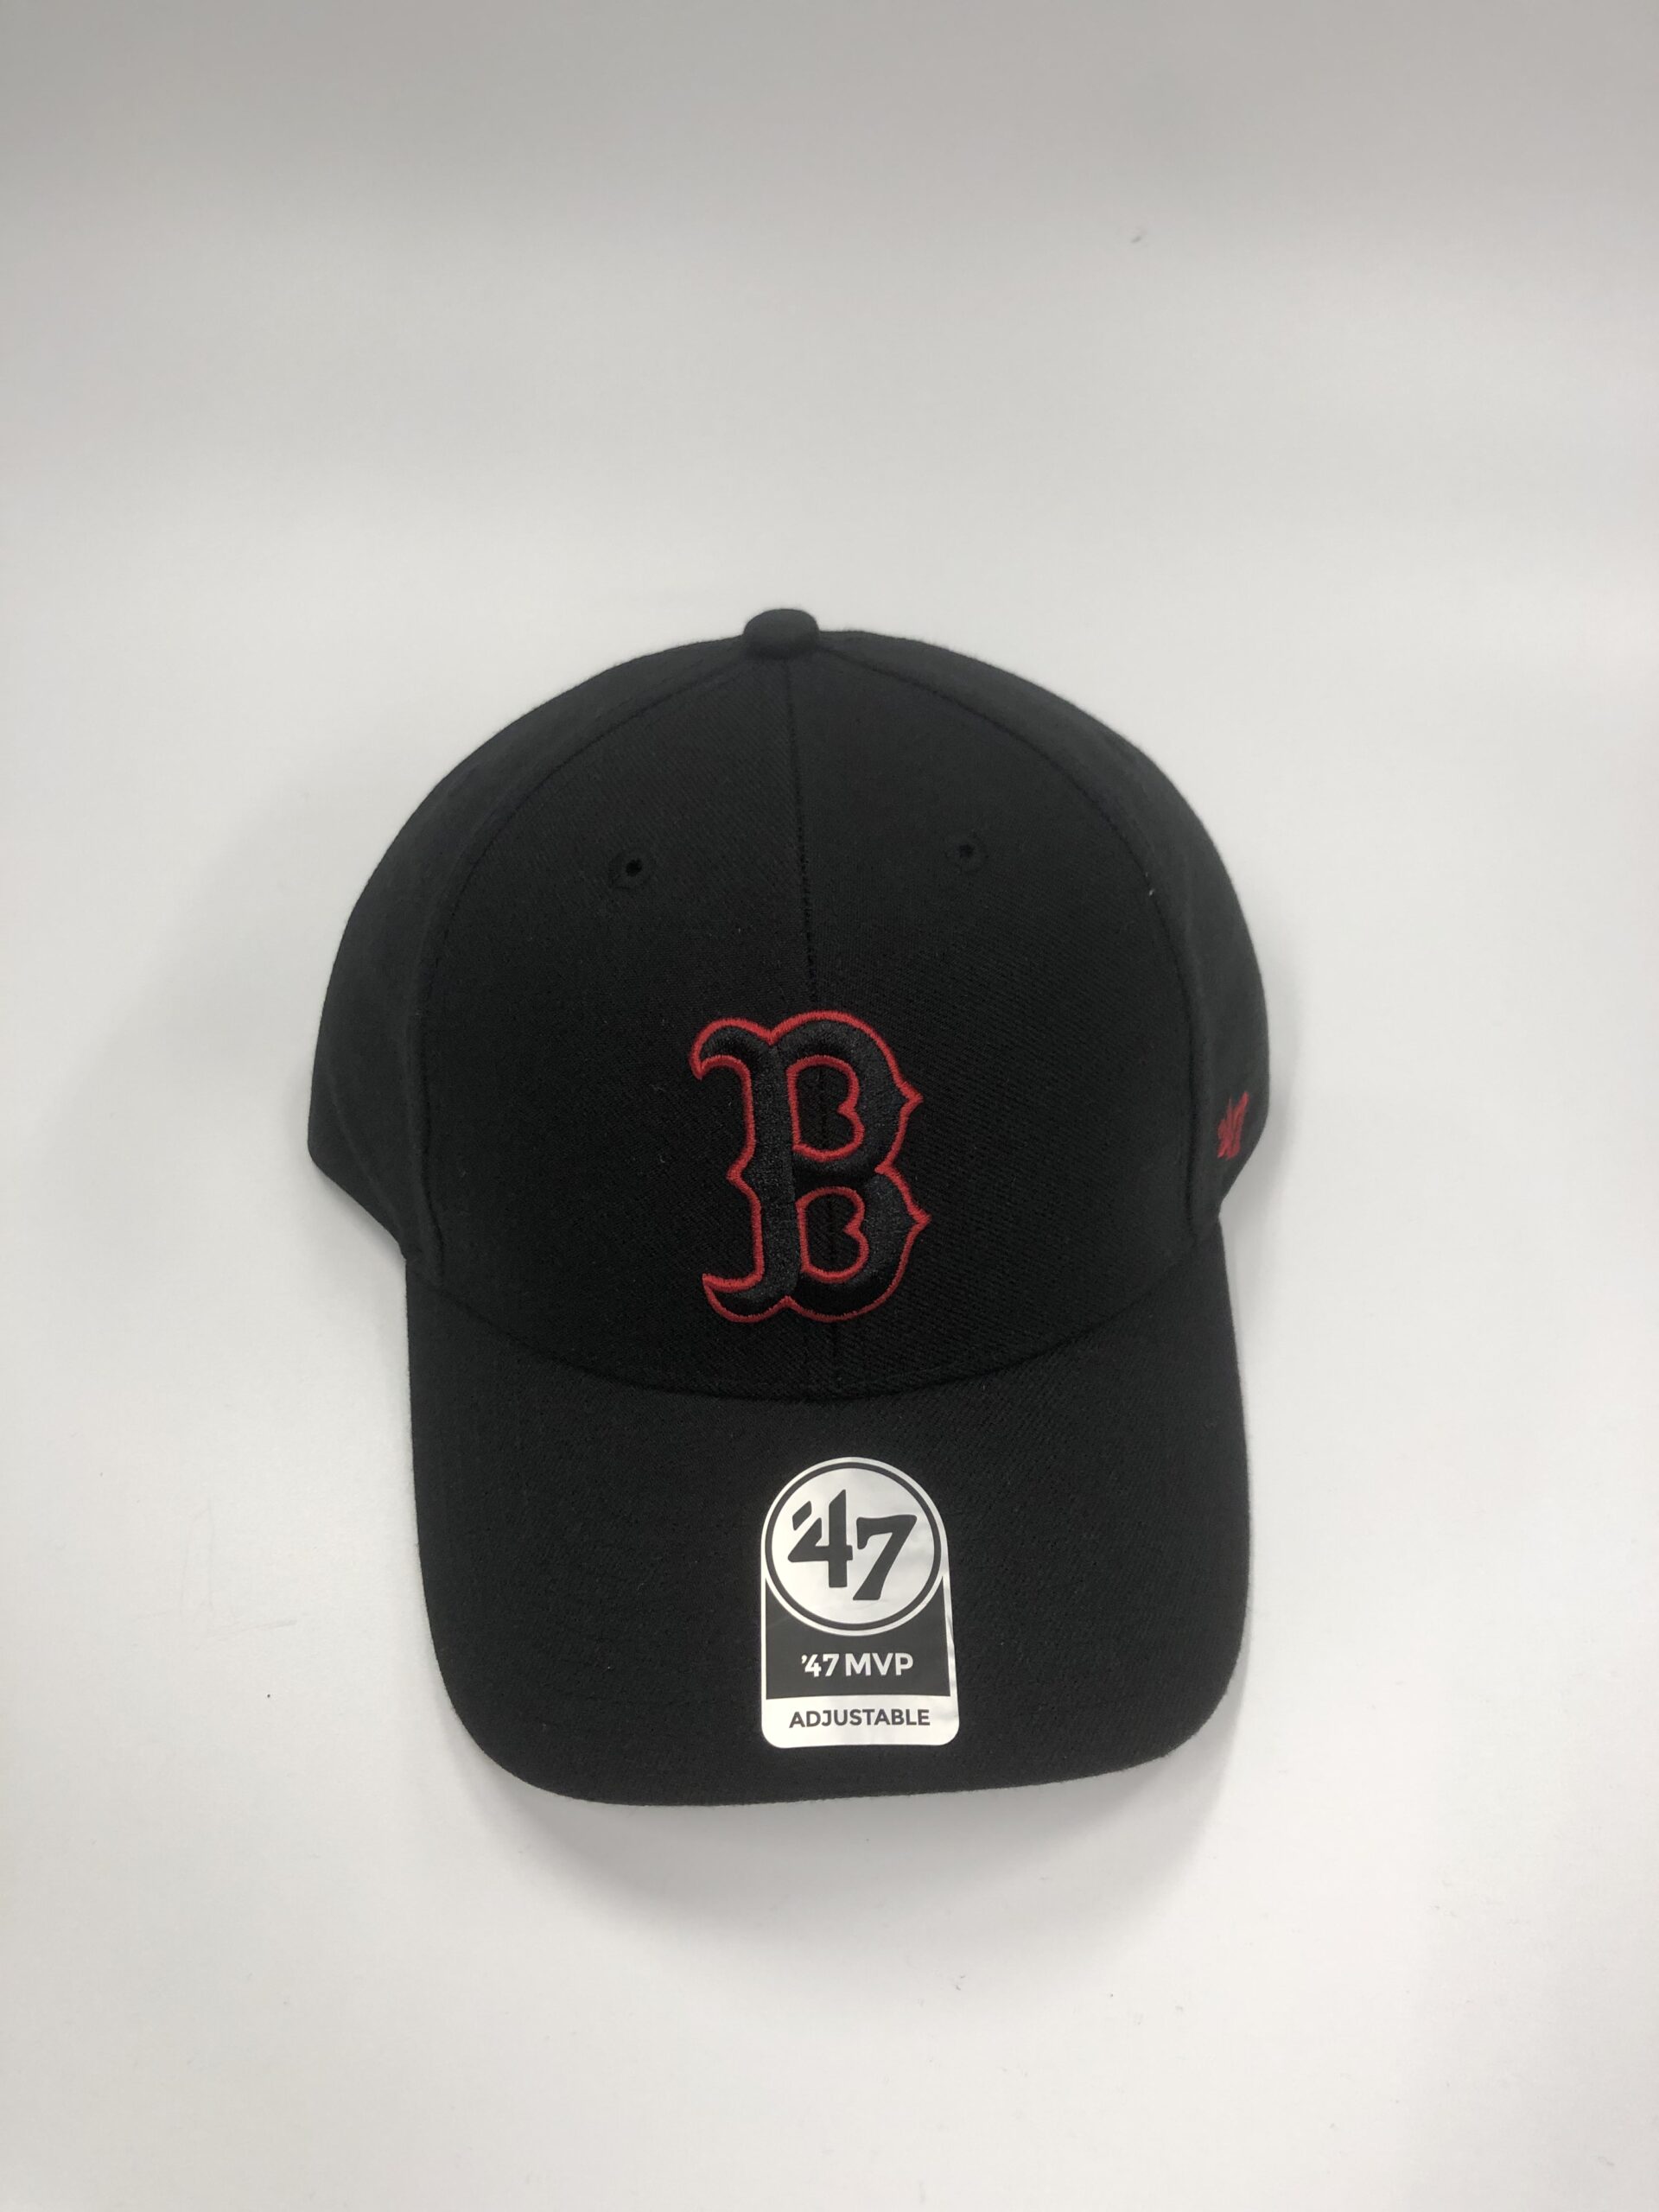 Red Sox’47 MVP Black